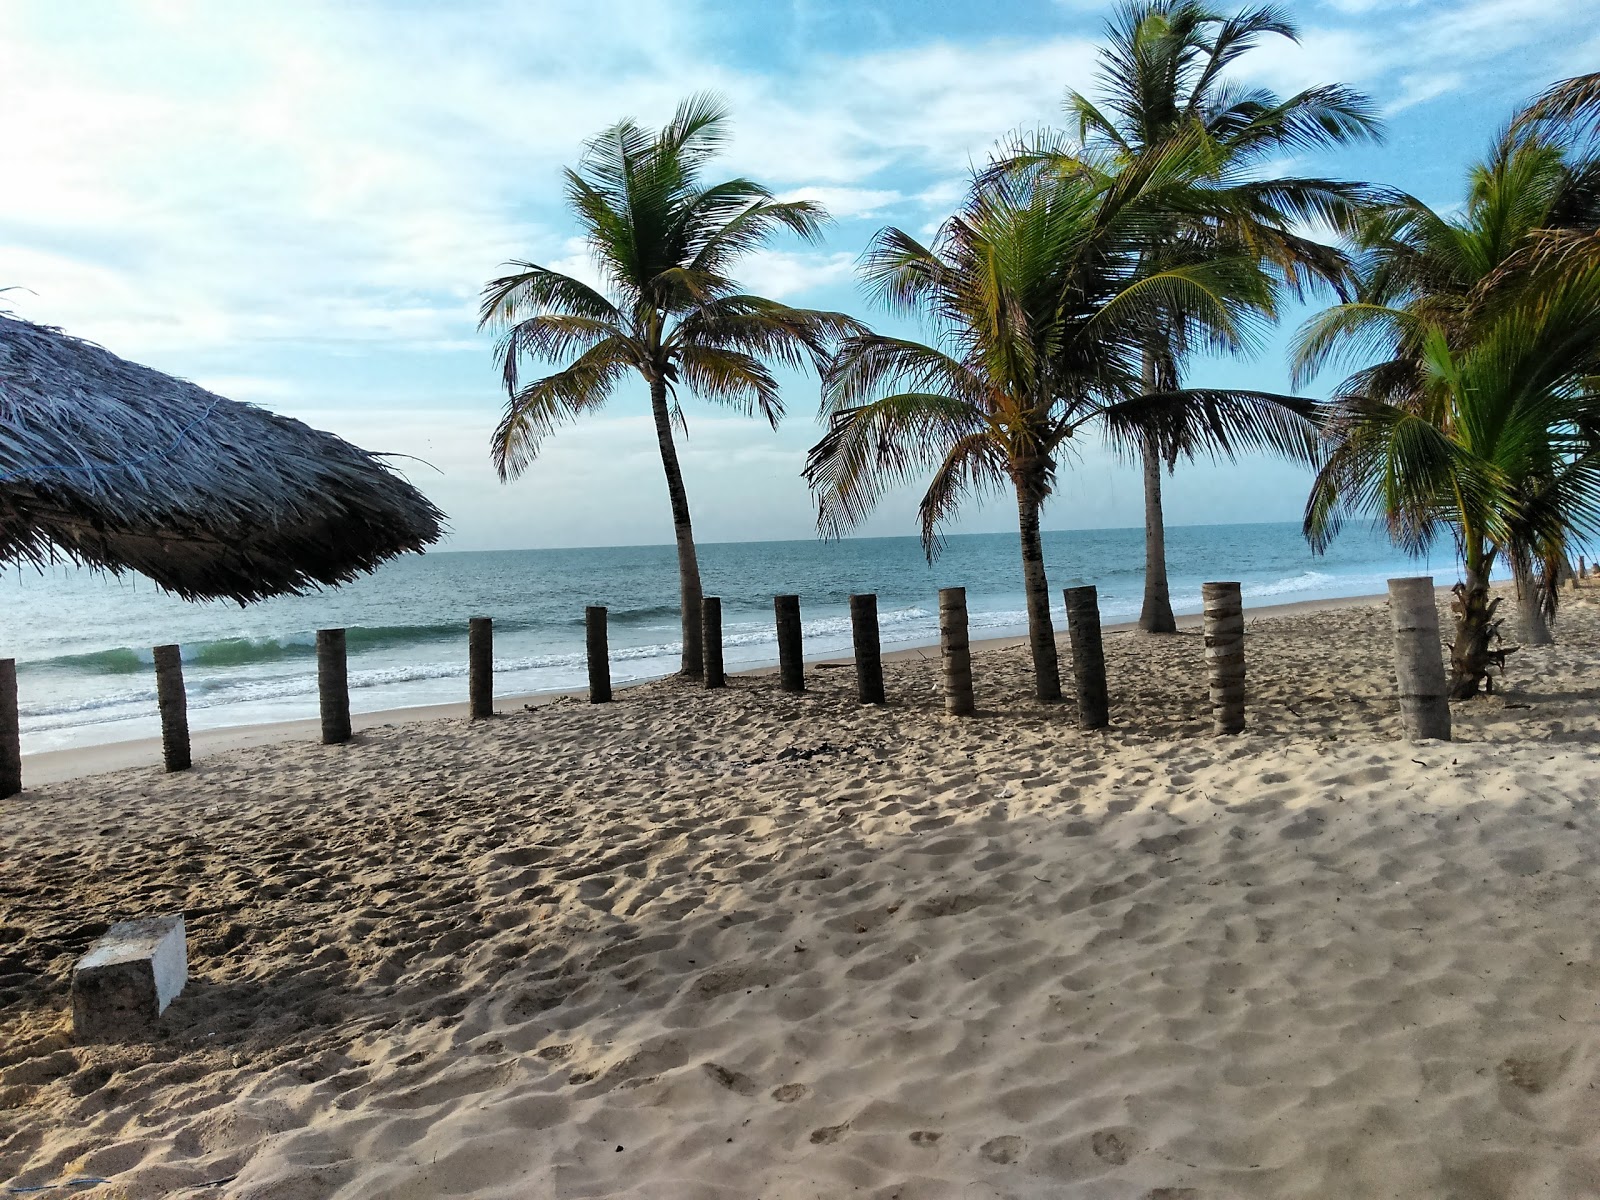 Foto de Praia do Miai de Cima - lugar popular entre os apreciadores de relaxamento